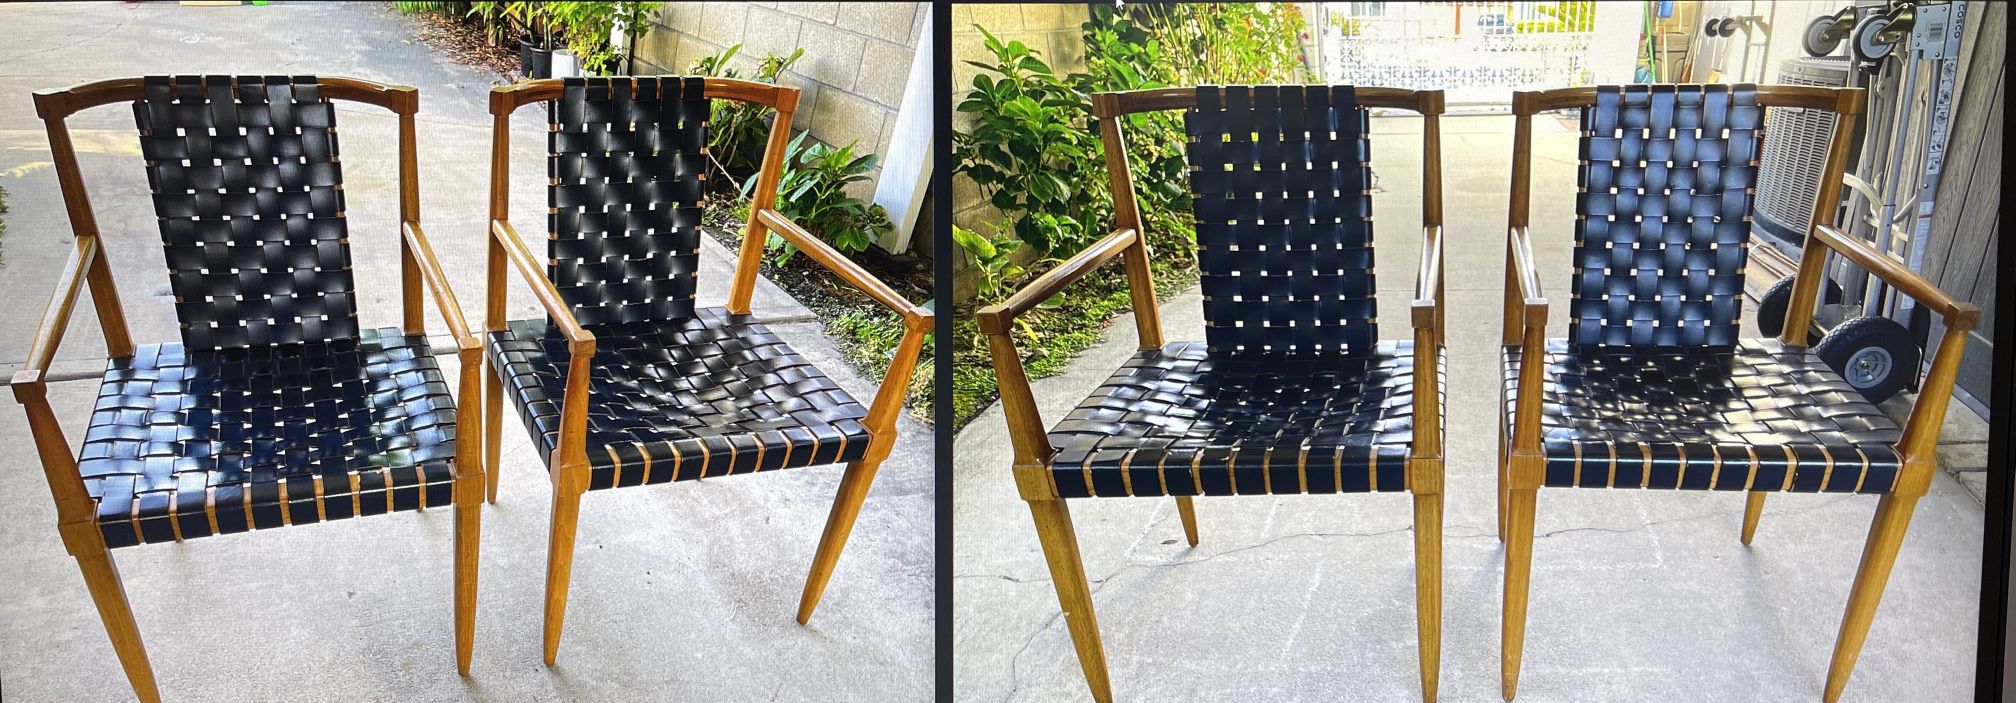 4 Set- Tomlinson ‘Sophisticate Line’ - Black Strap Leather Chair - Vintage Mid Century Modern MCM